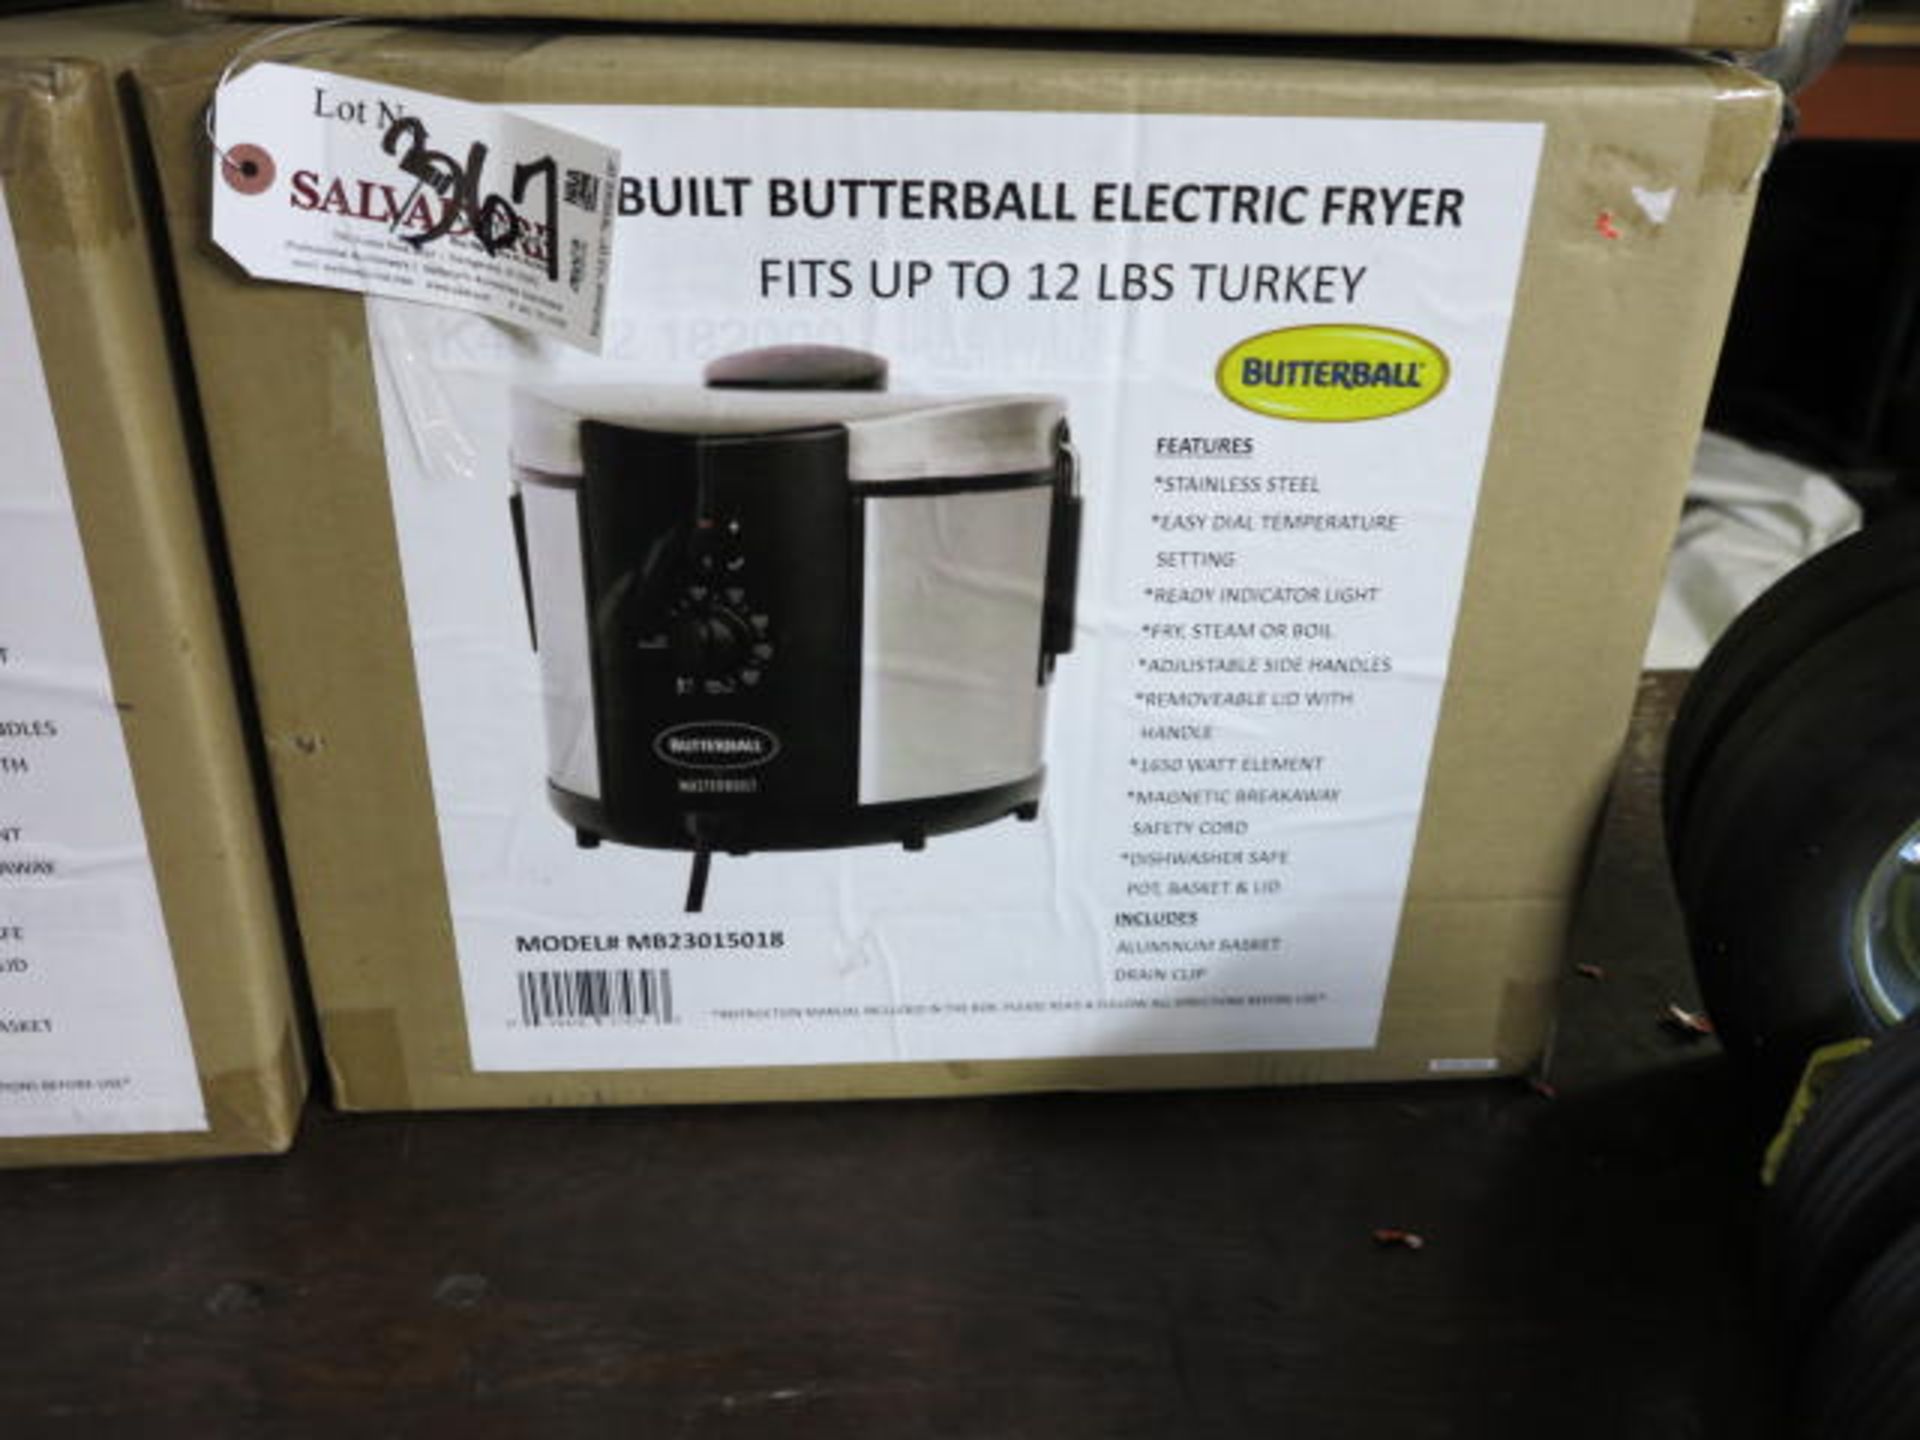 Masterbuilt Butterball Electric Fryer Model MB23015018